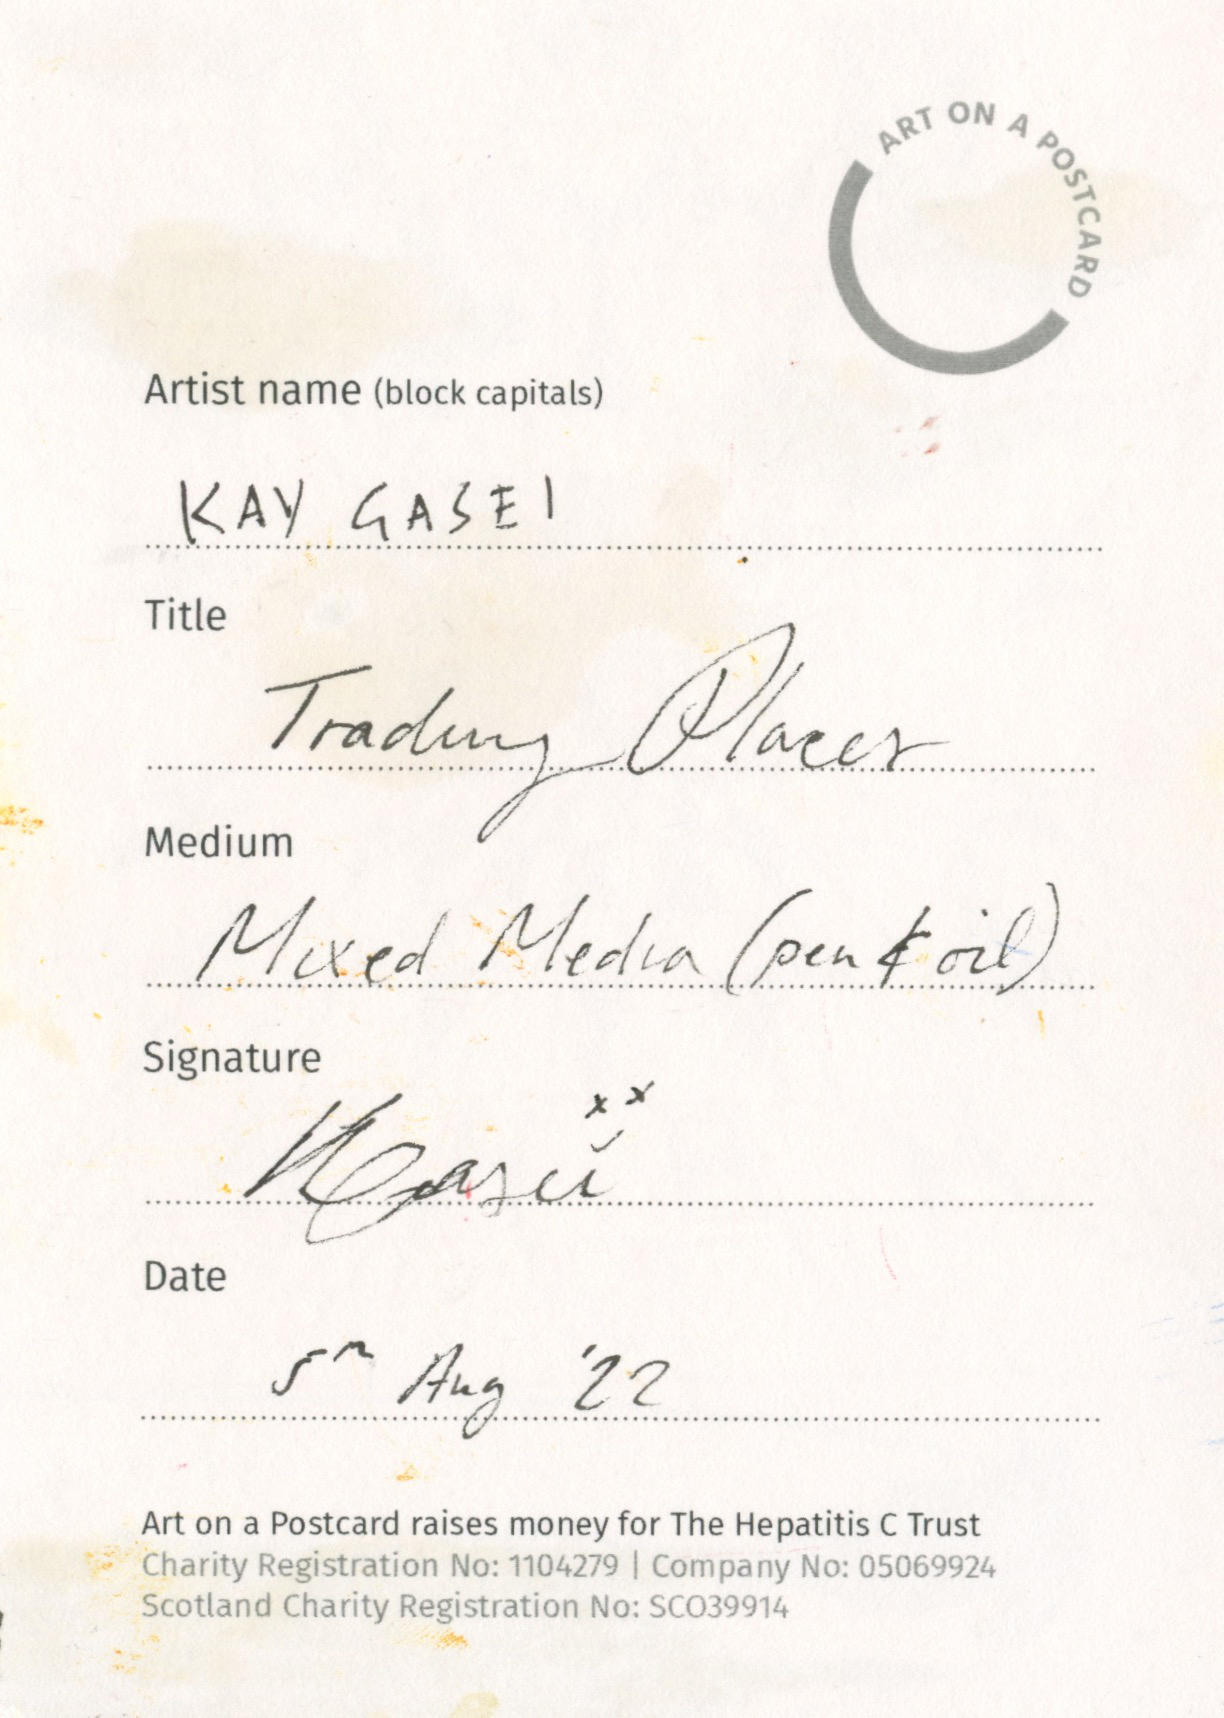 47. Kay Gasei - Trading Places - BACK